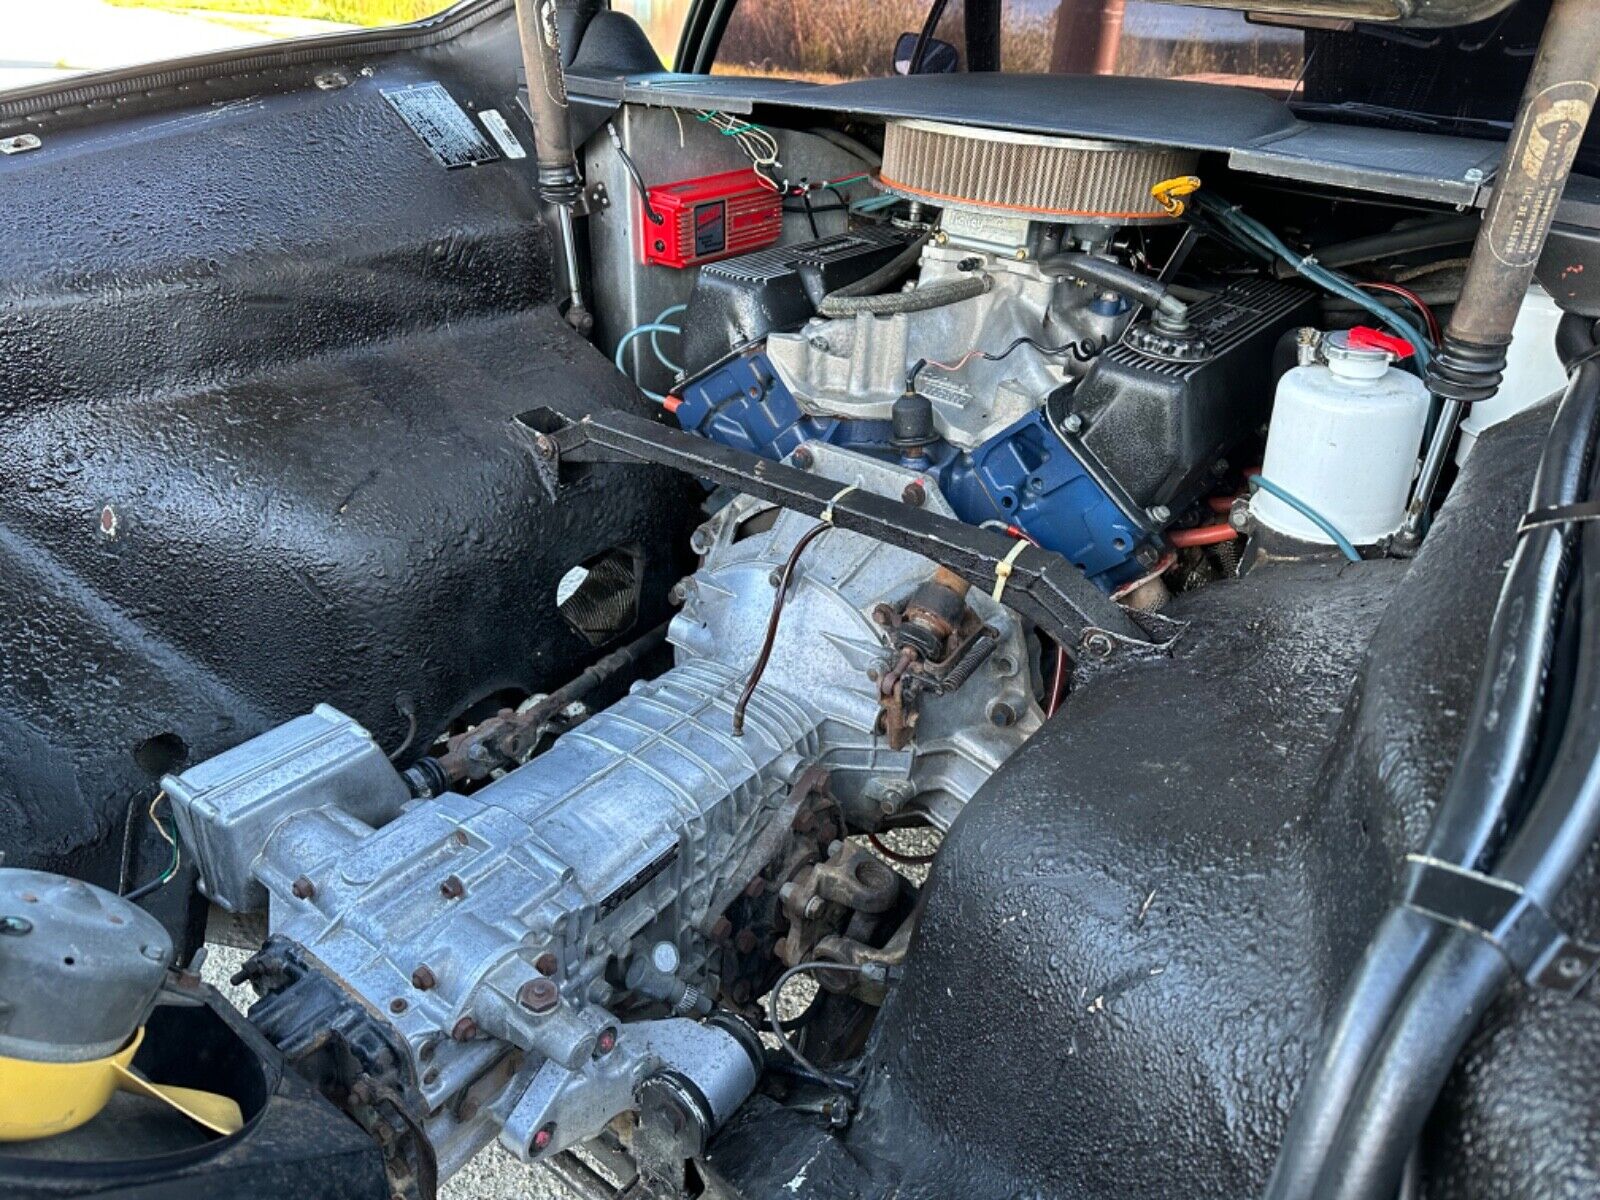 1974 De Tomaso Pantera - Ford 351 V8 engine and transmission